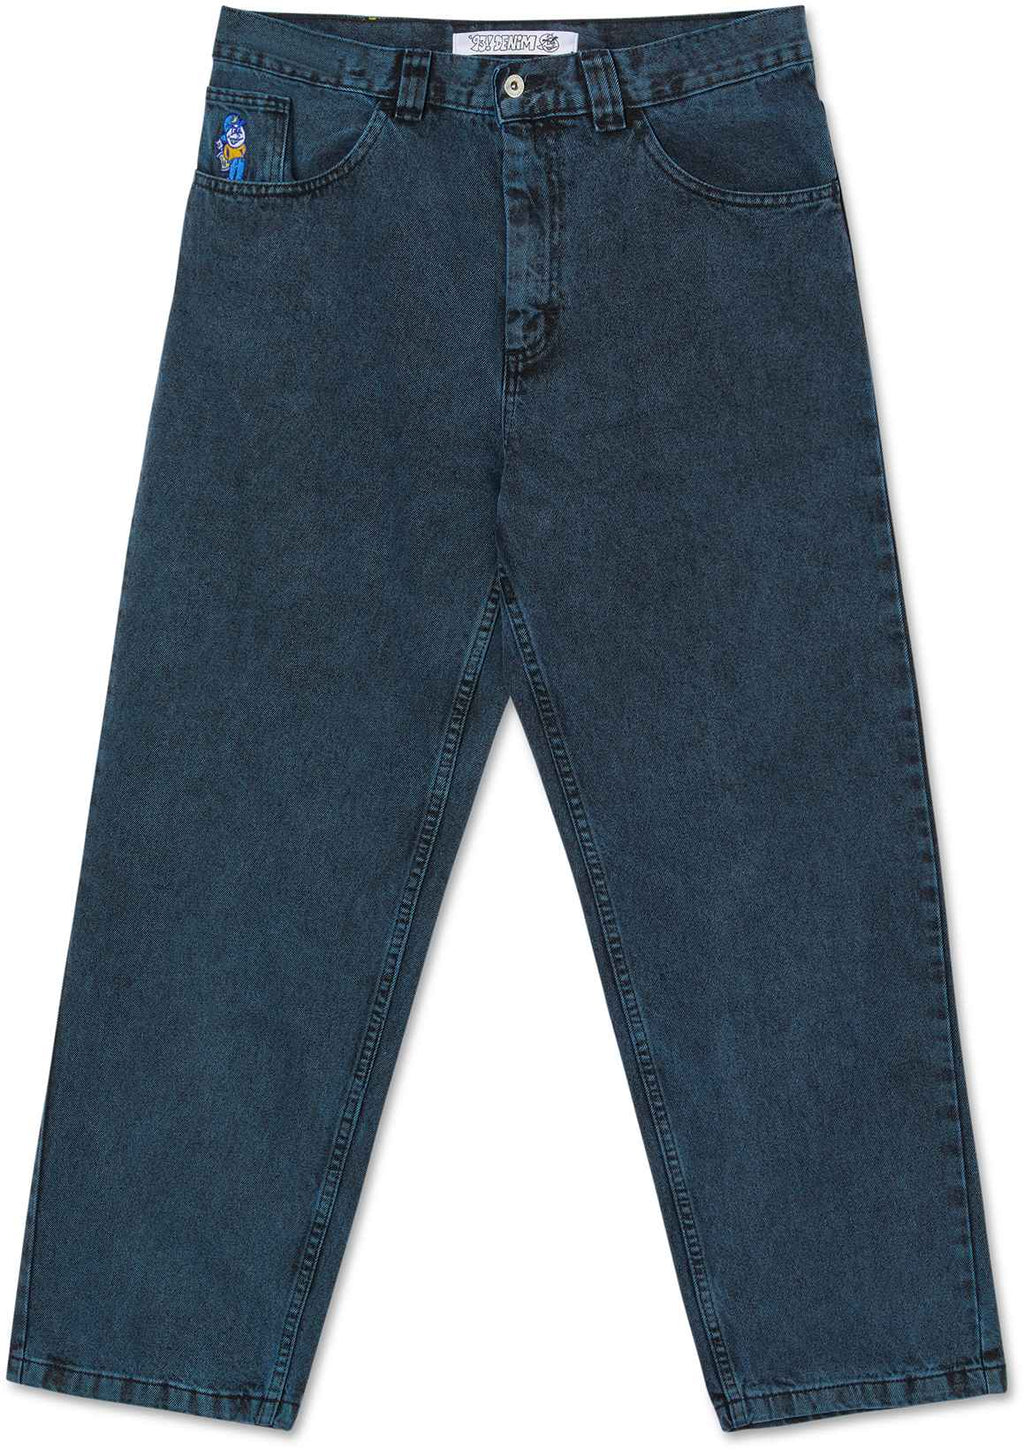  Polar Skate Co. Jeans '93 Denim Cyan Black Blue Uomo - 2